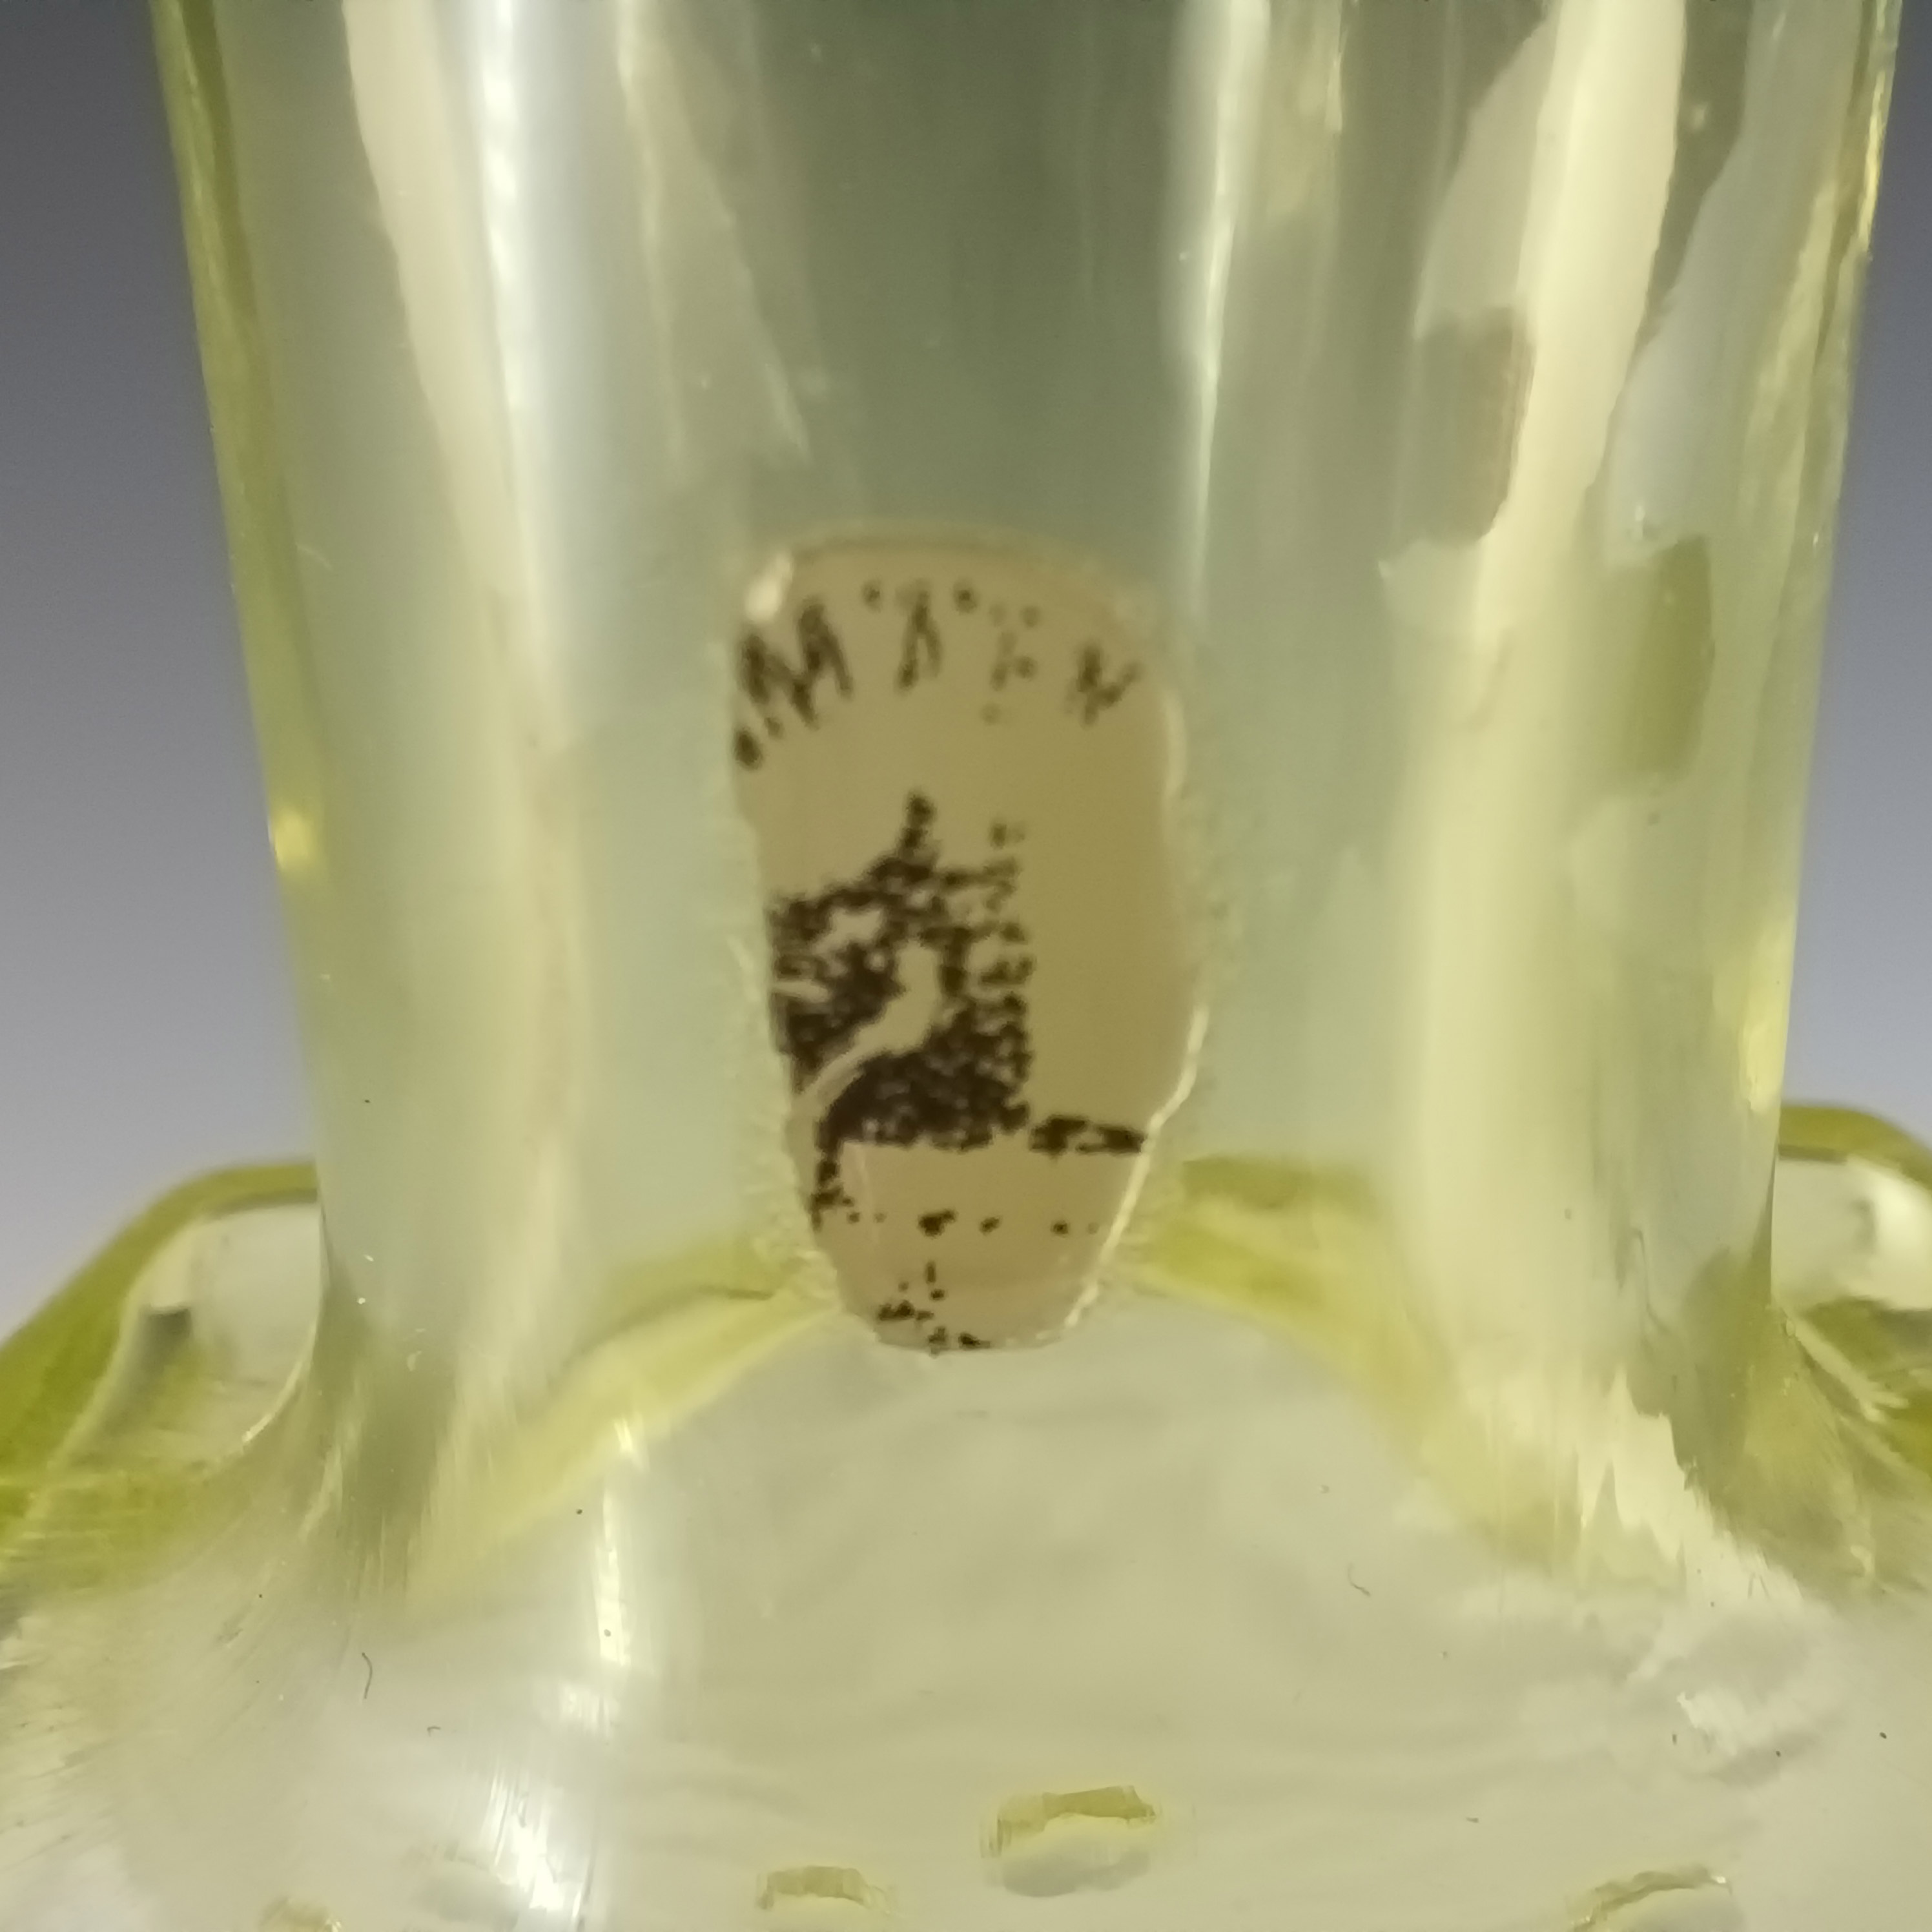 Riihimaki #1720 Riihimaen Uranium Glass Nanny Still Polaris Vase - Click Image to Close